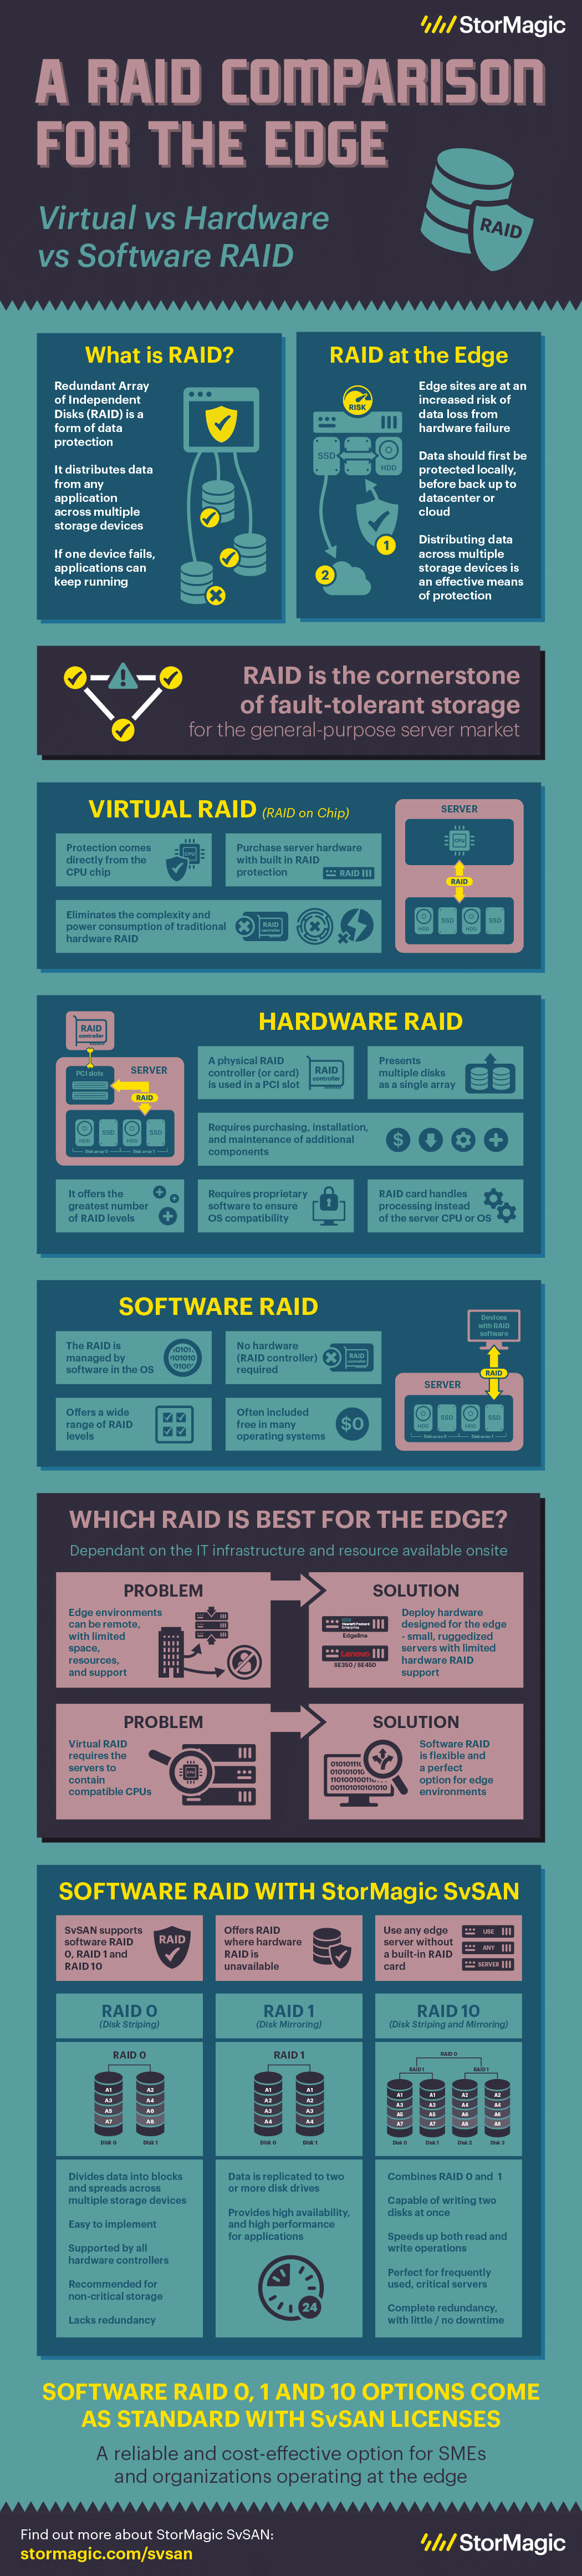 Software vs Hardware RAID Comparison for the Edge Infographic